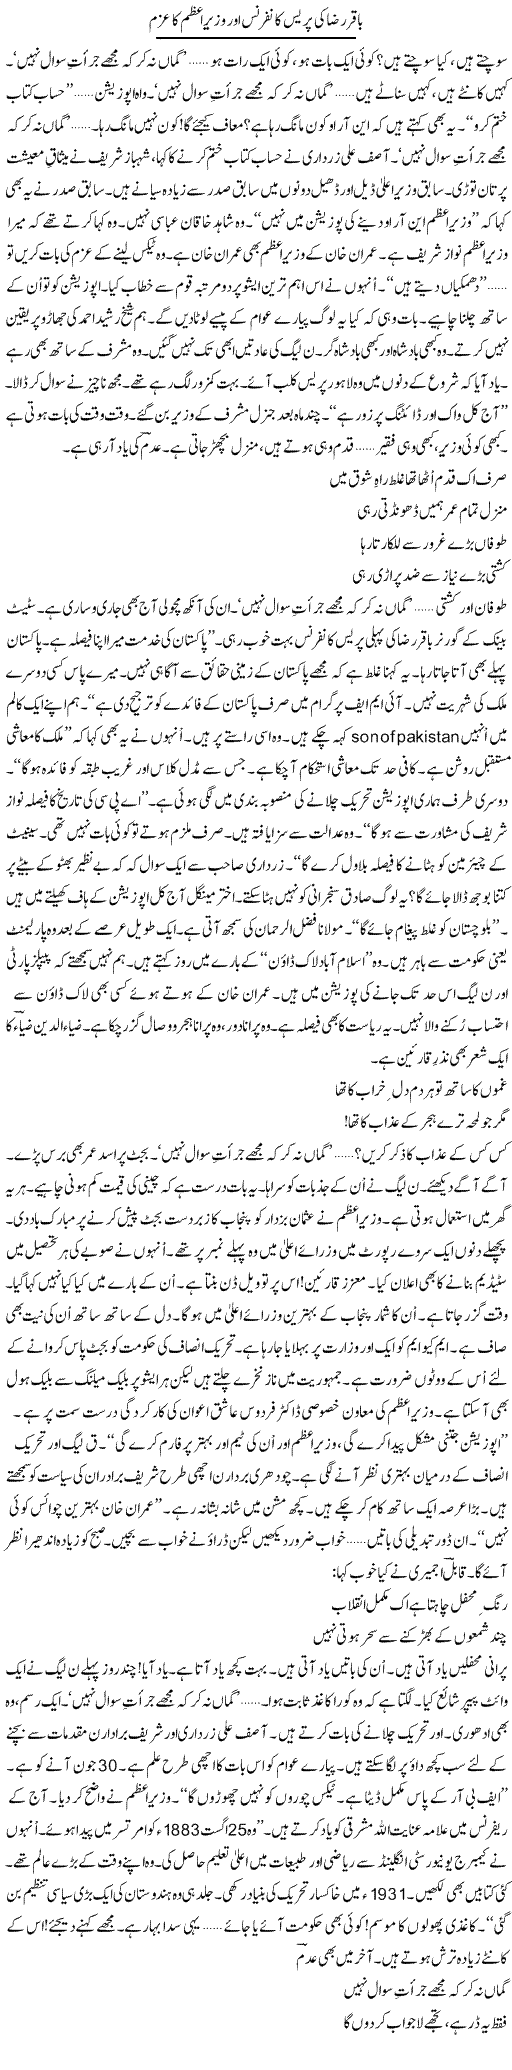 Baqir Raza Ki Press Conference Aur Wazir e Azam Ka Azm | Ejaz Hafeez Khan | Daily Urdu Columns